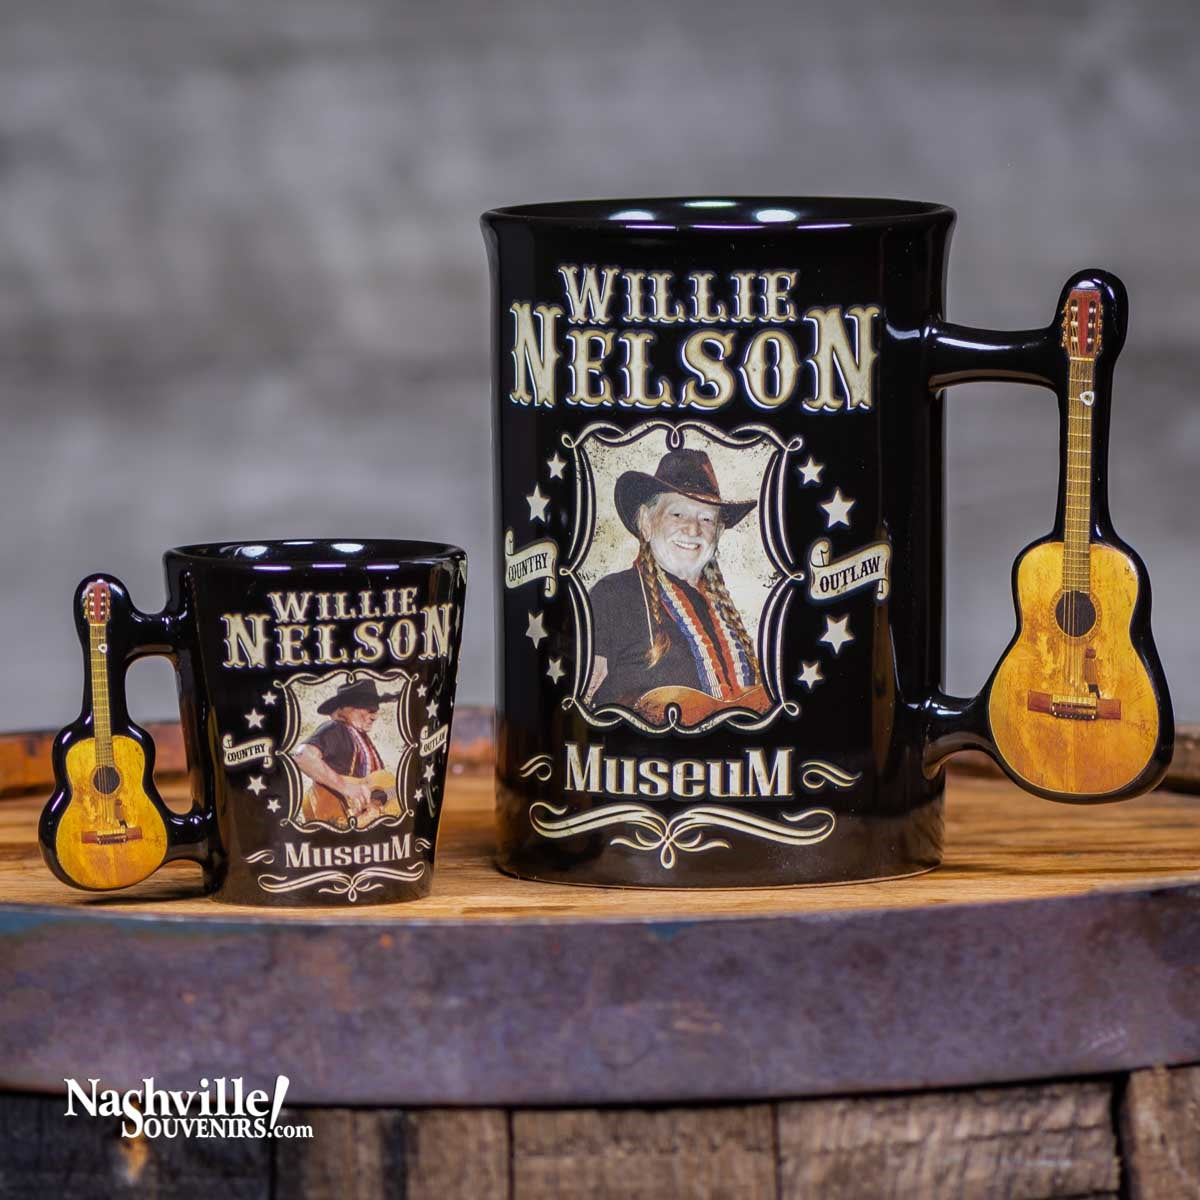 Willie Nelson "Trigger" Mug and Shot Glass Combo